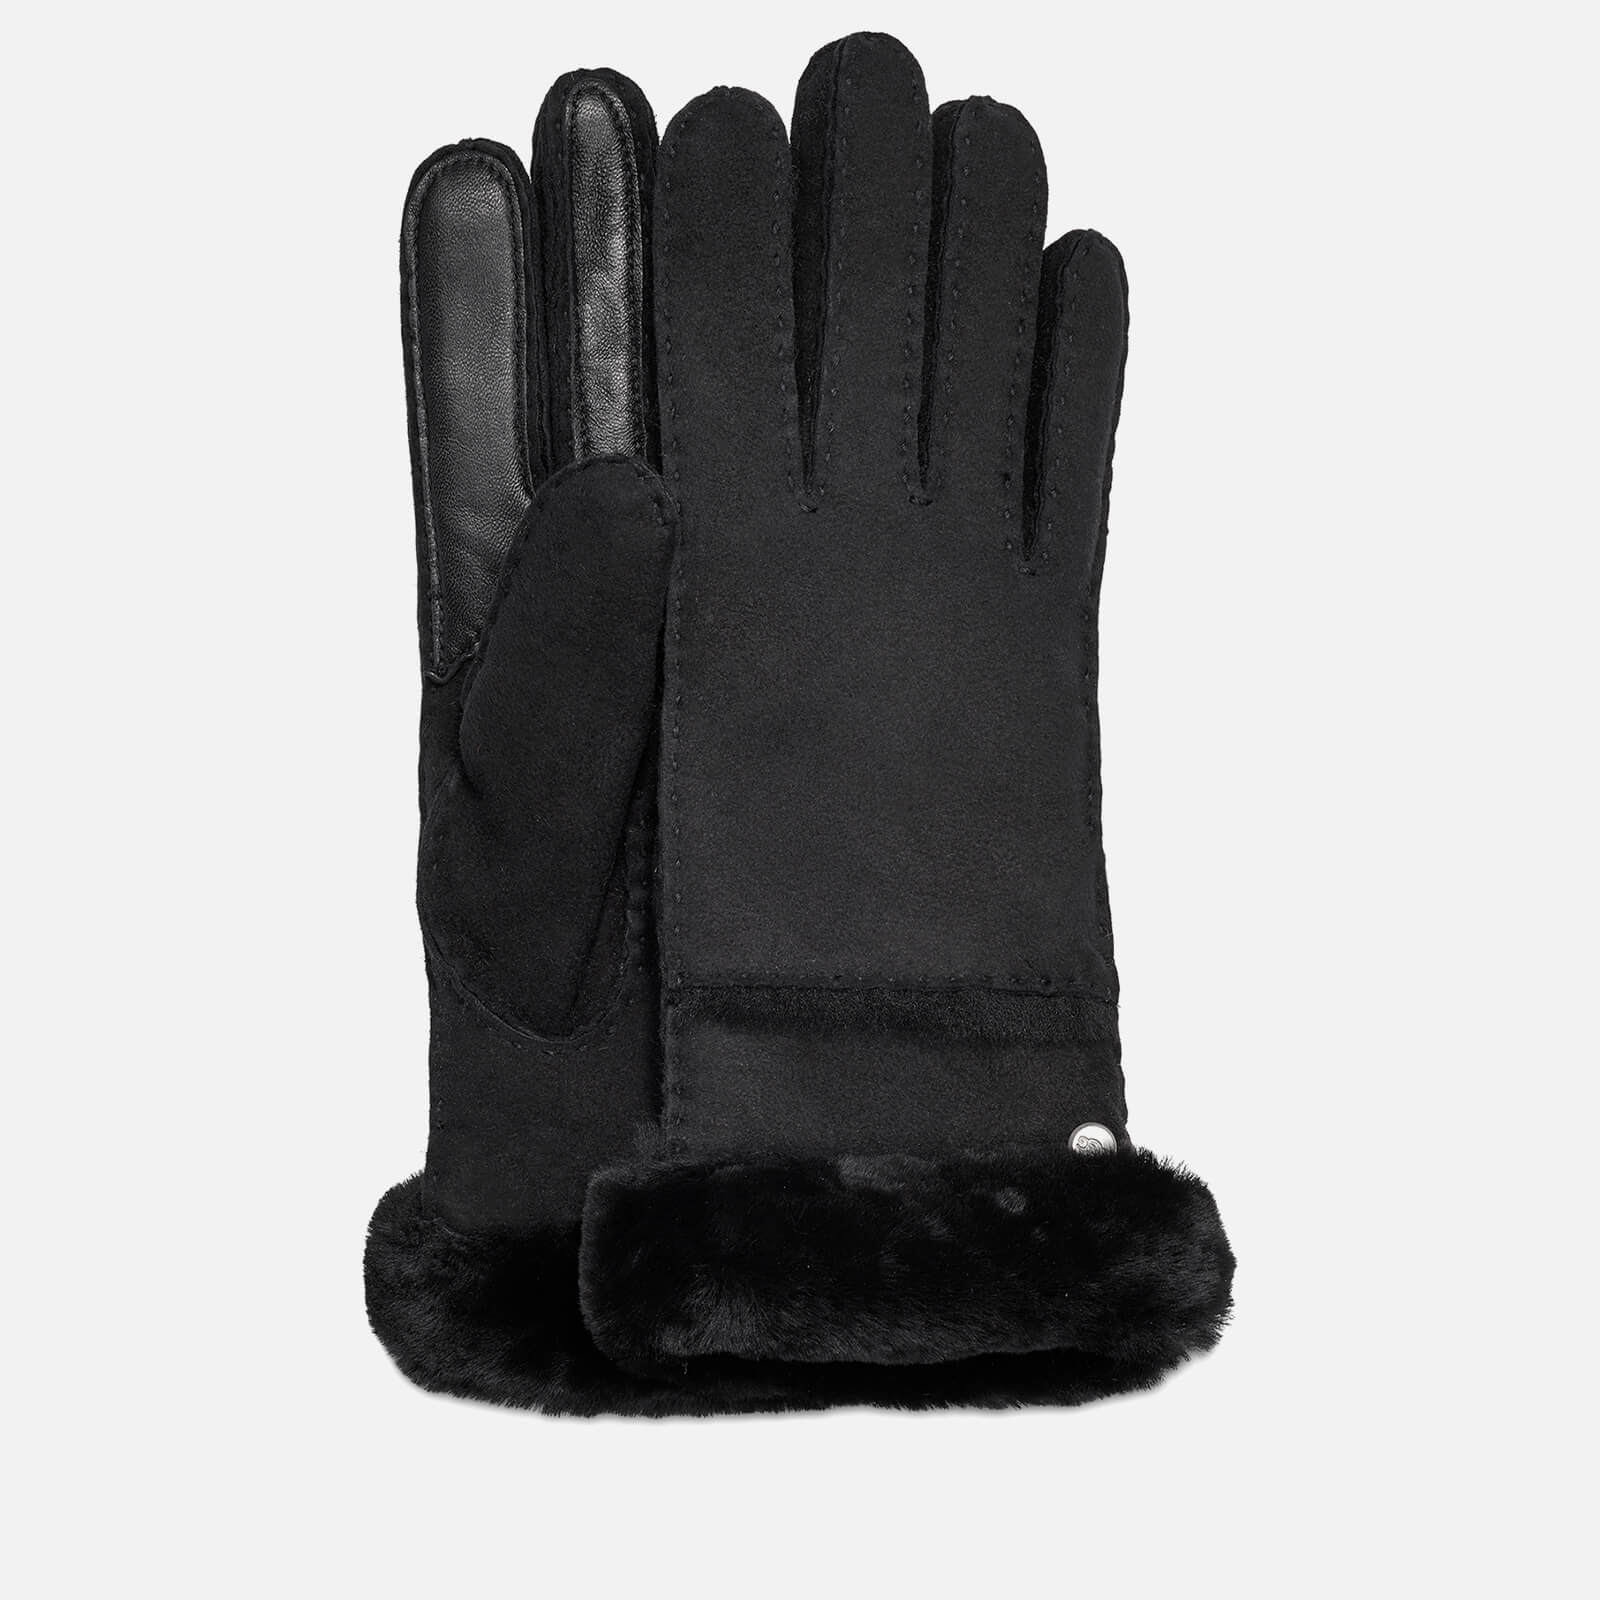 UGG Women's Seamed Tech Glove - Black - M